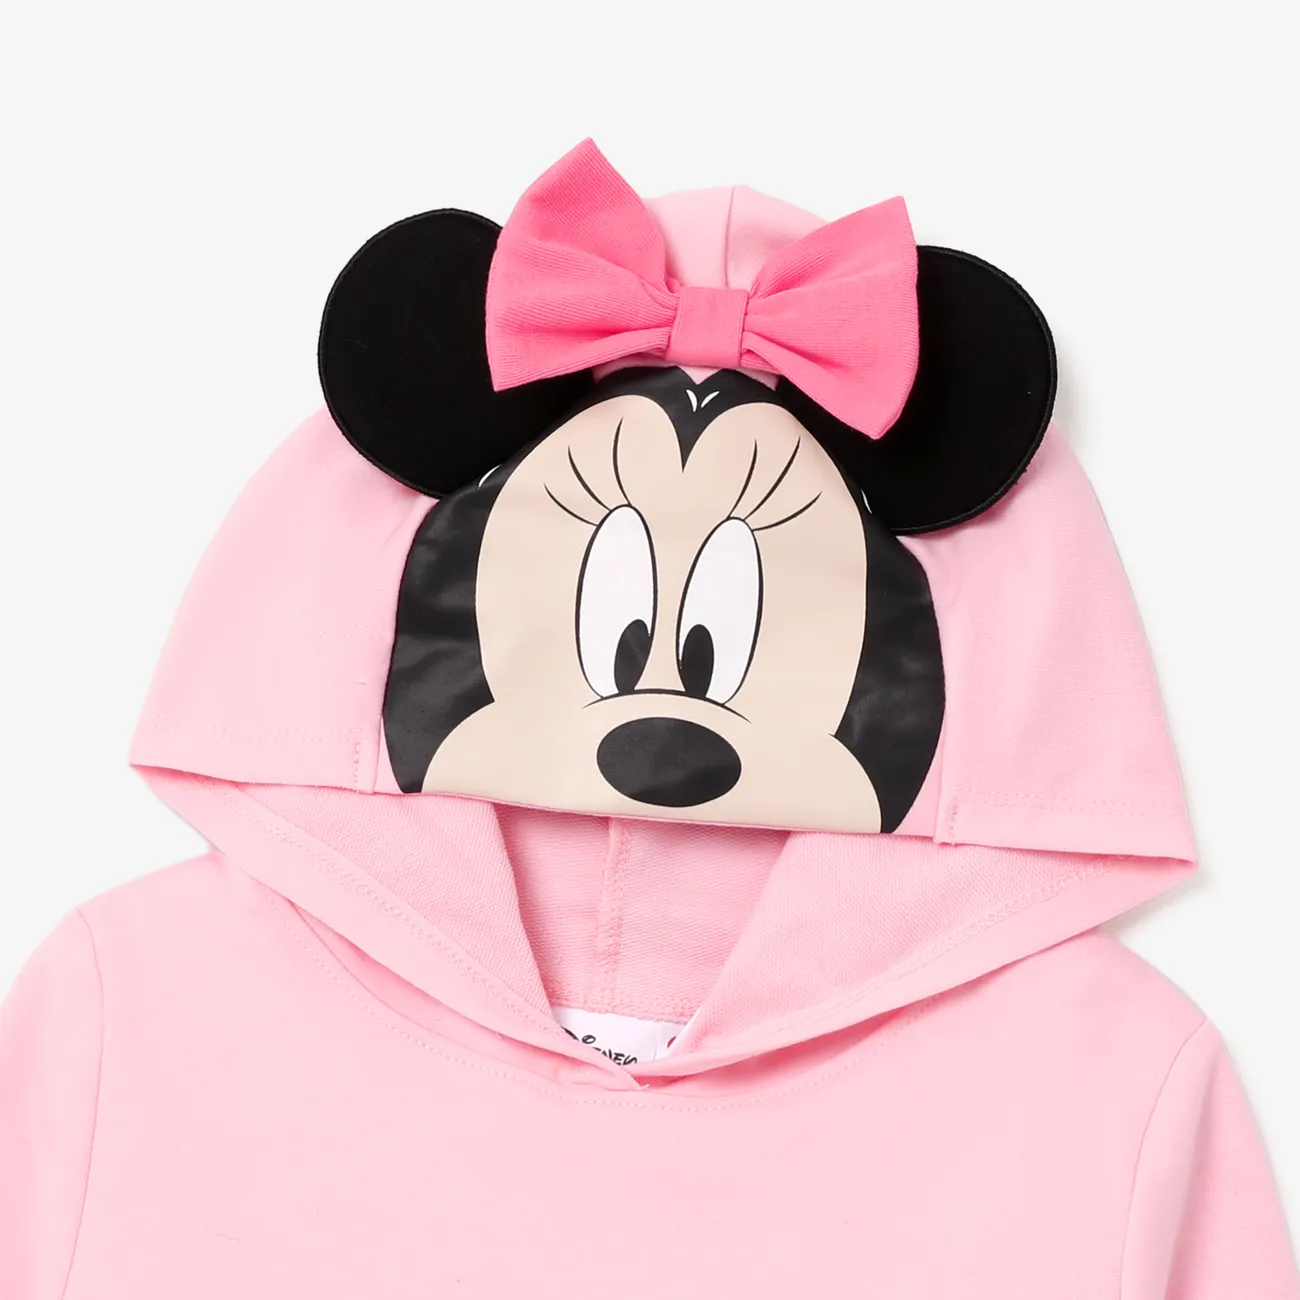 Disney Mickey and Friends Criança Menina Hipertátil/3D Personagens Com capuz Sweatshirt Rosa big image 1